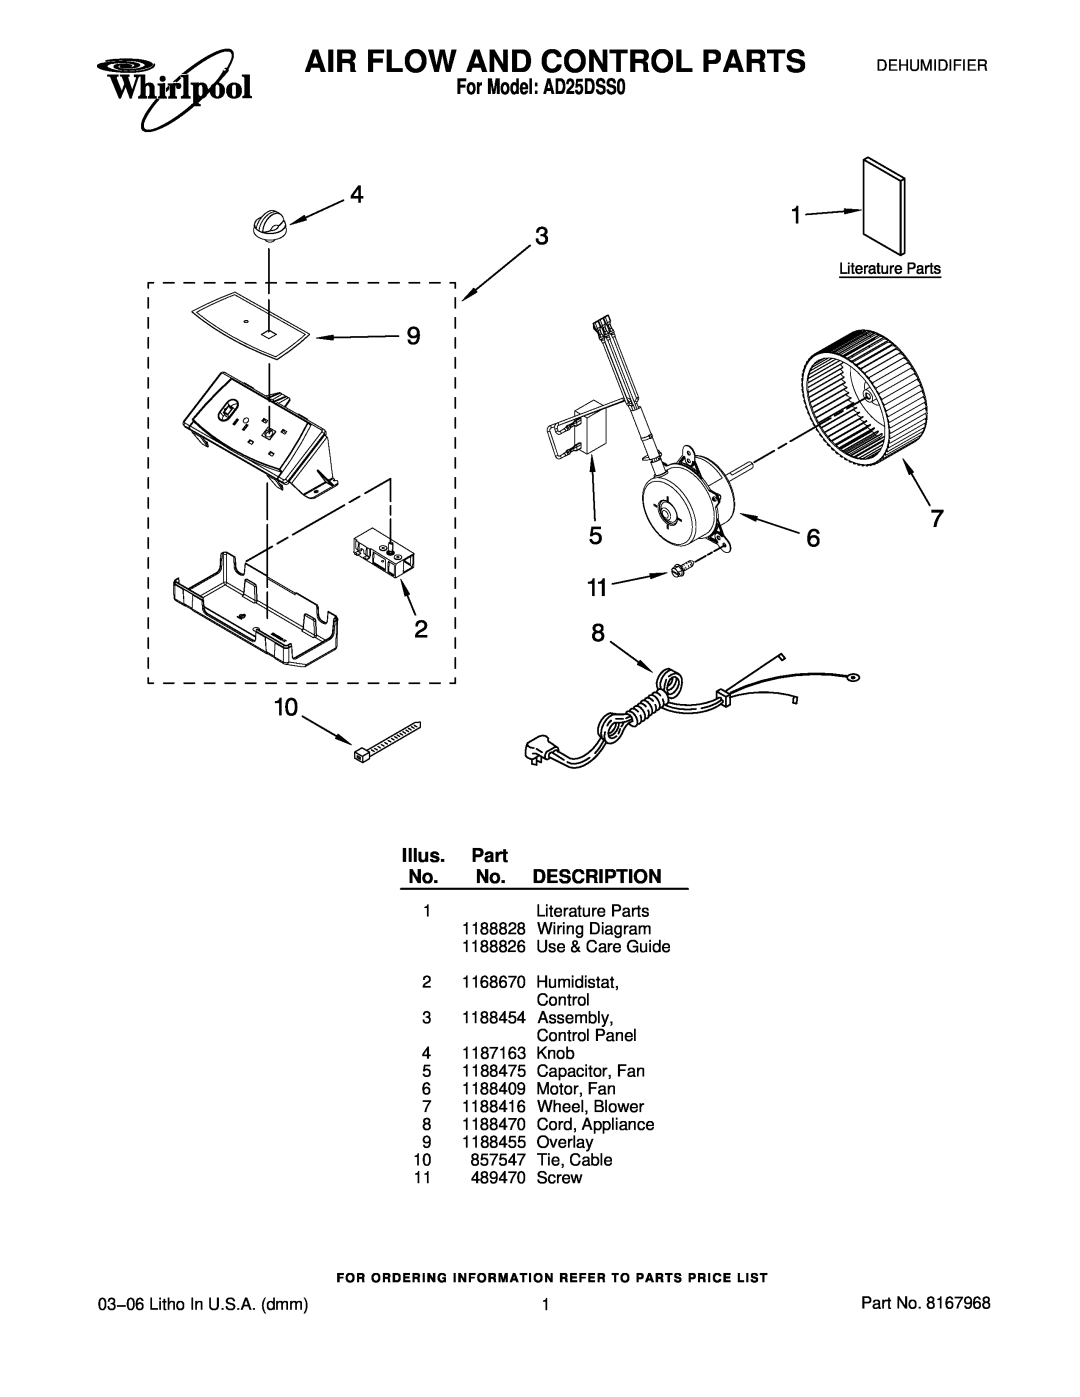 Whirlpool manual For Model AD25DSS0, Illus. Part No. No. DESCRIPTION, Air Flow And Control Parts 